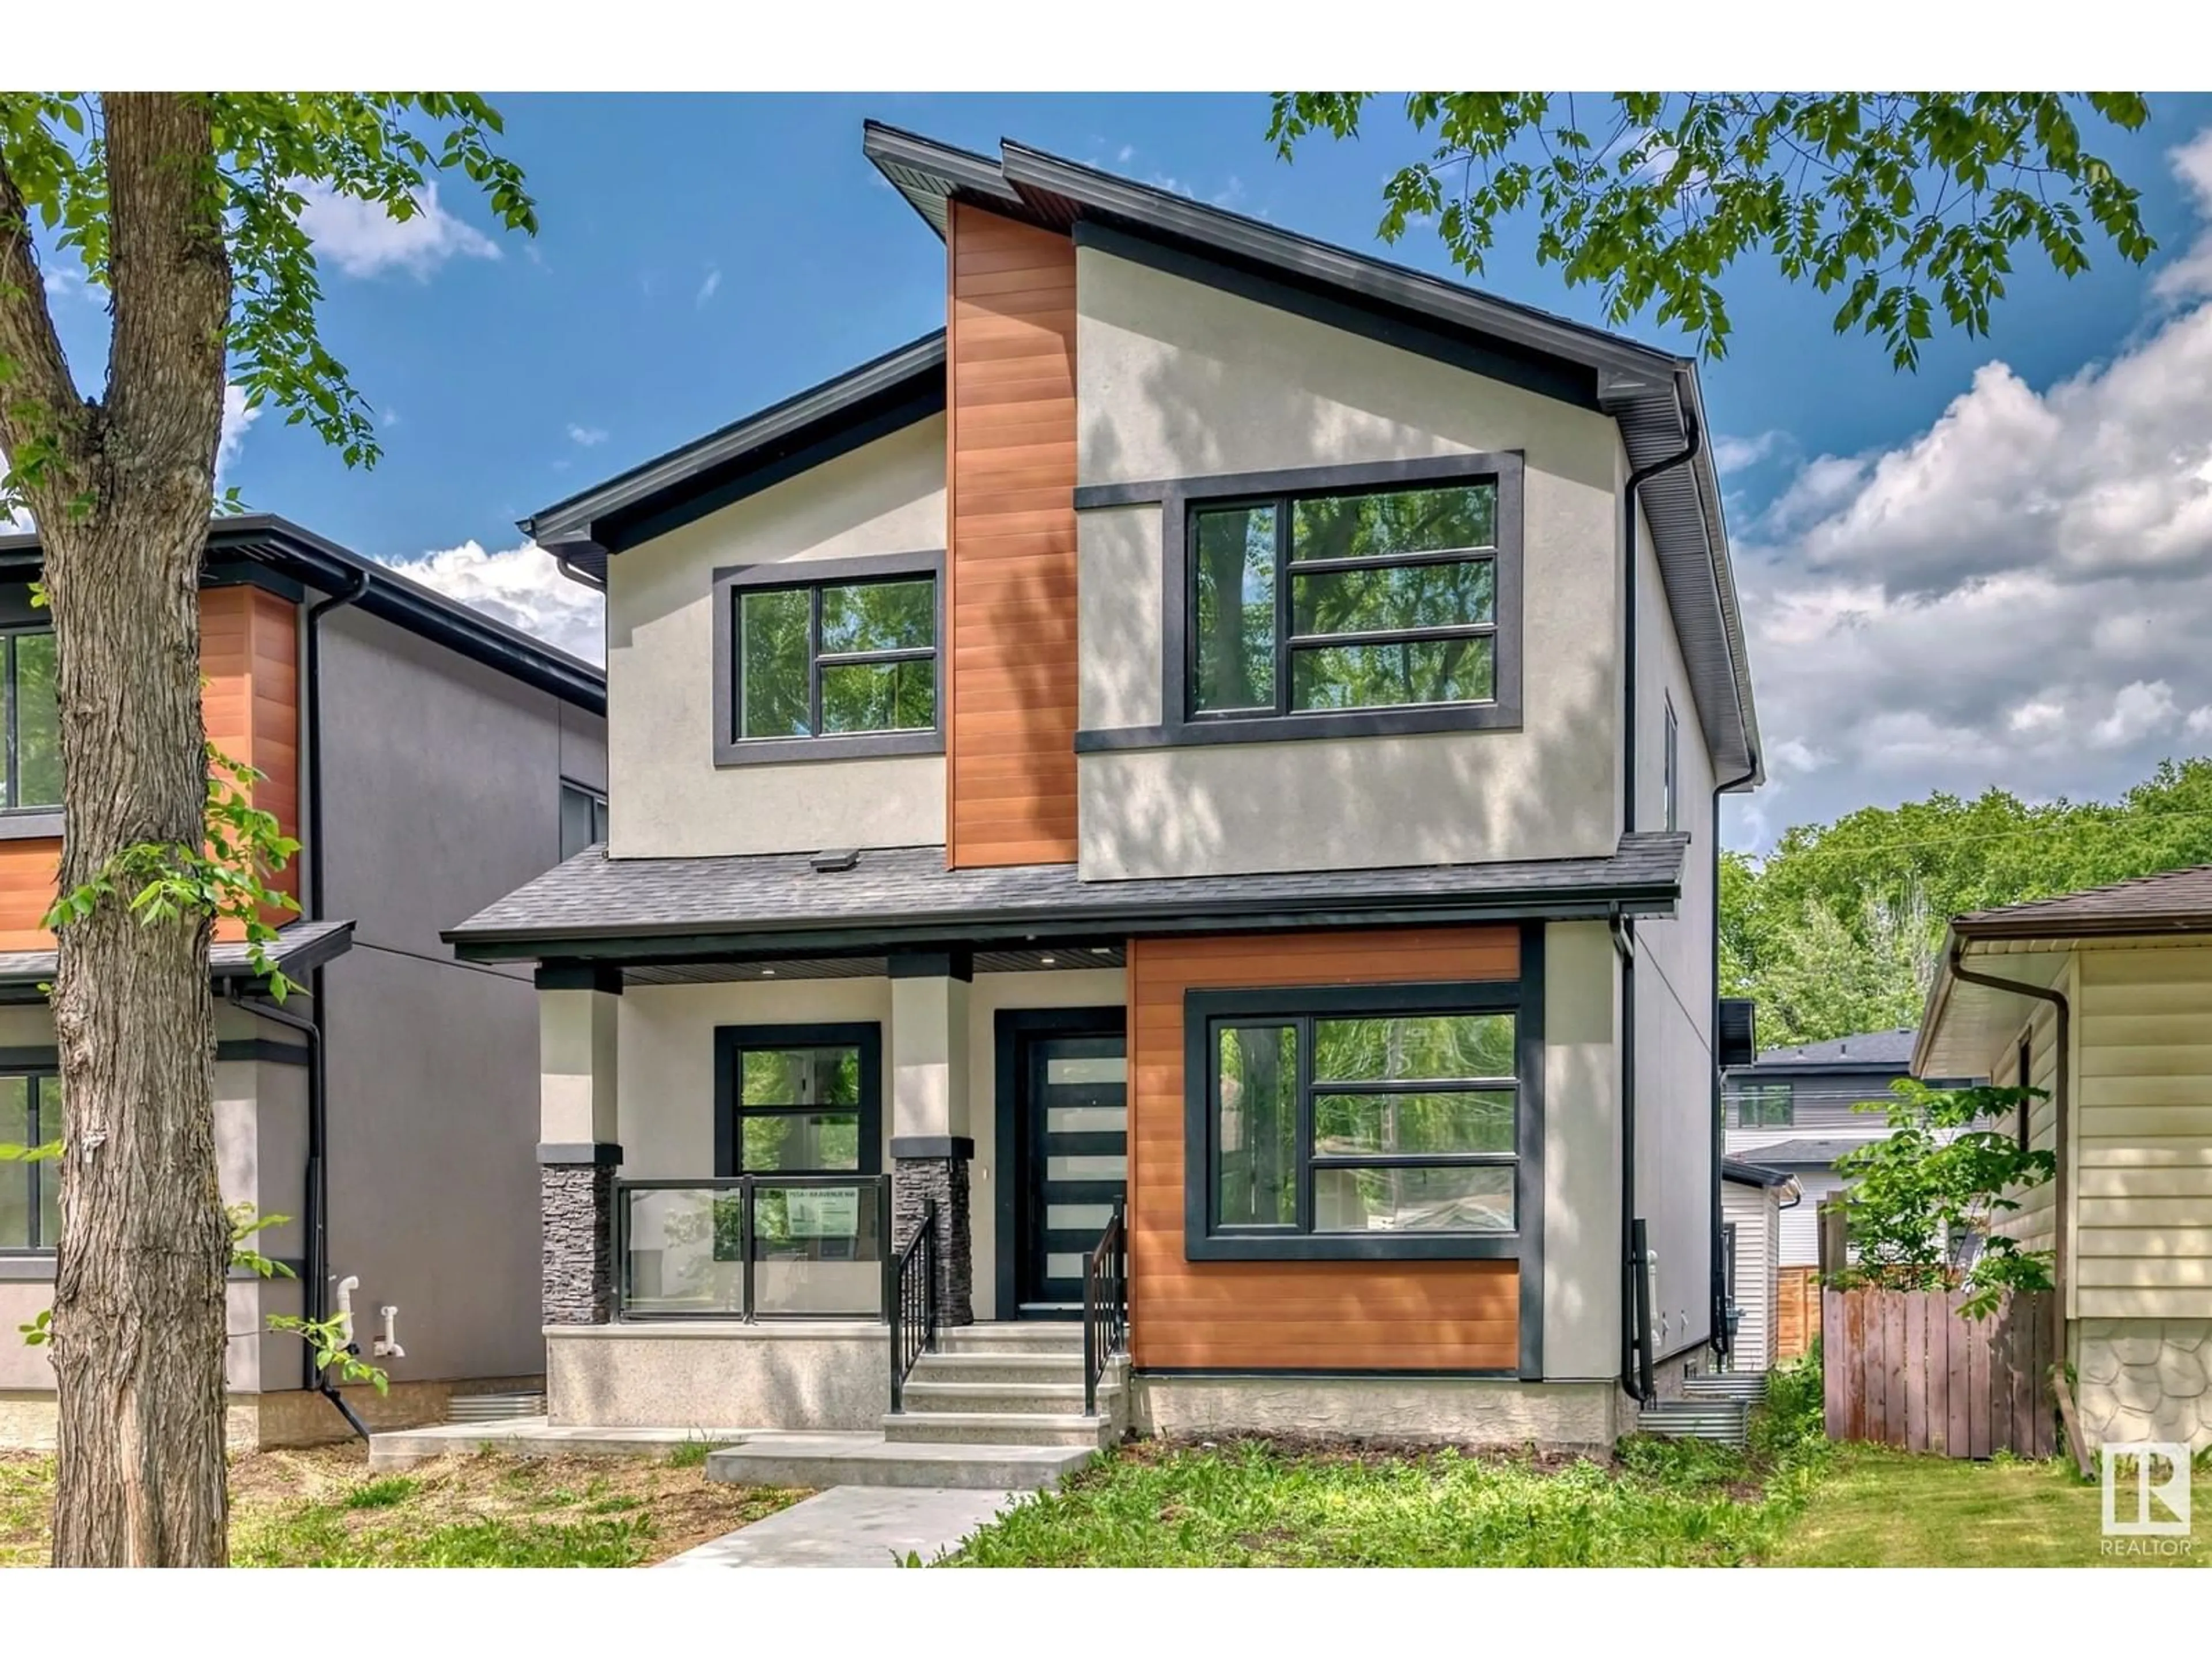 Home with brick exterior material for 7954 84 AV NW, Edmonton Alberta T6C1C5